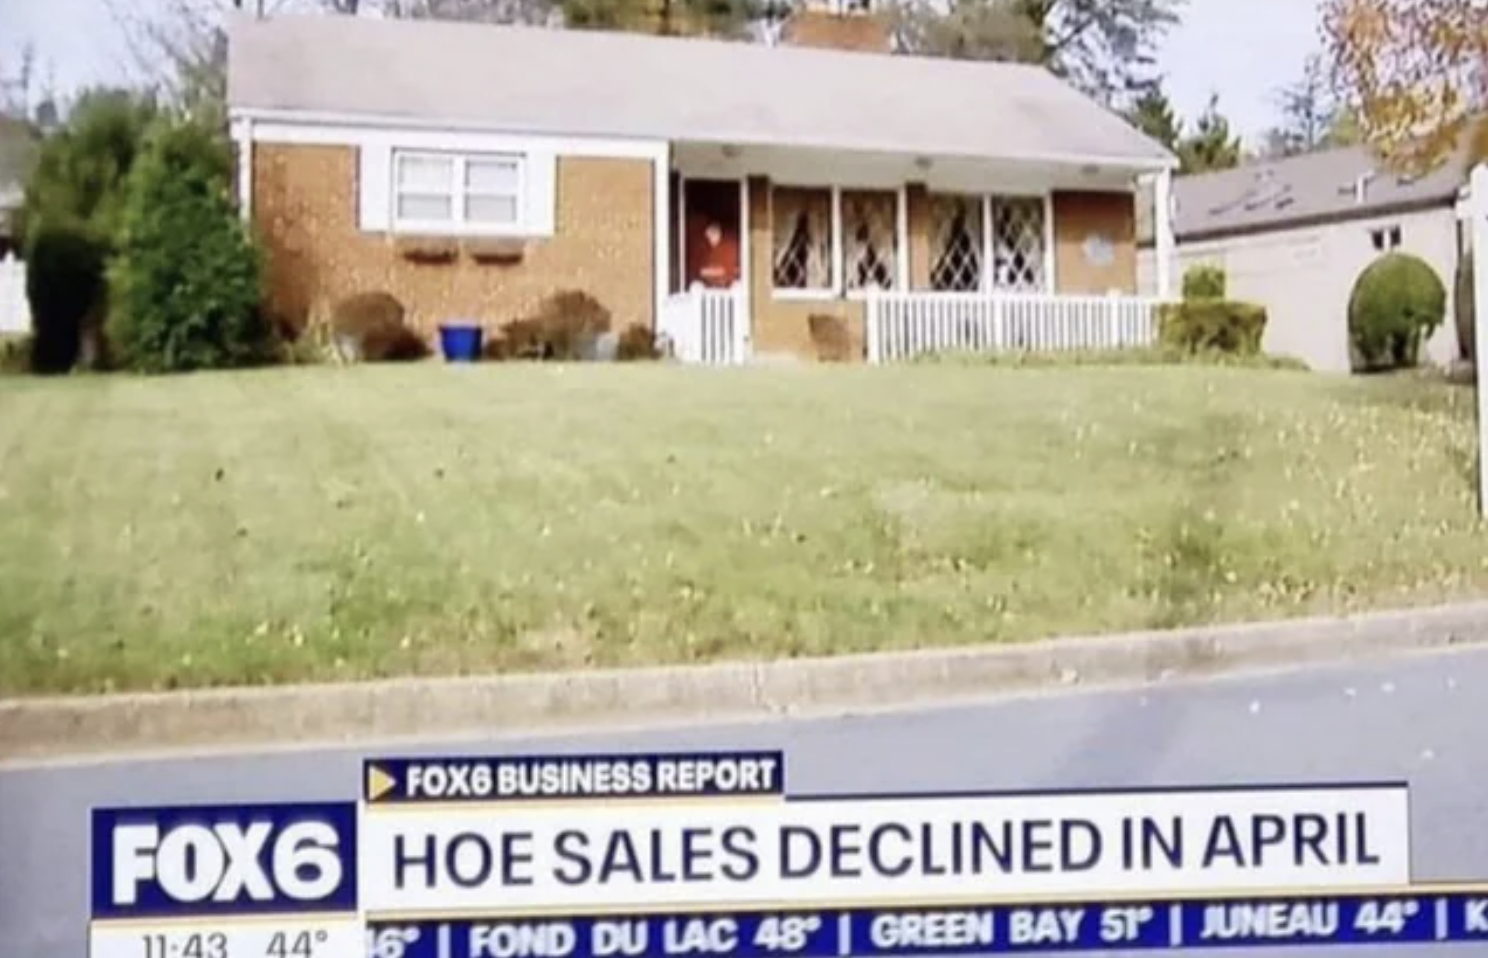 lawn - FOX6 Business Report FOX6 Hoe Sales Declined